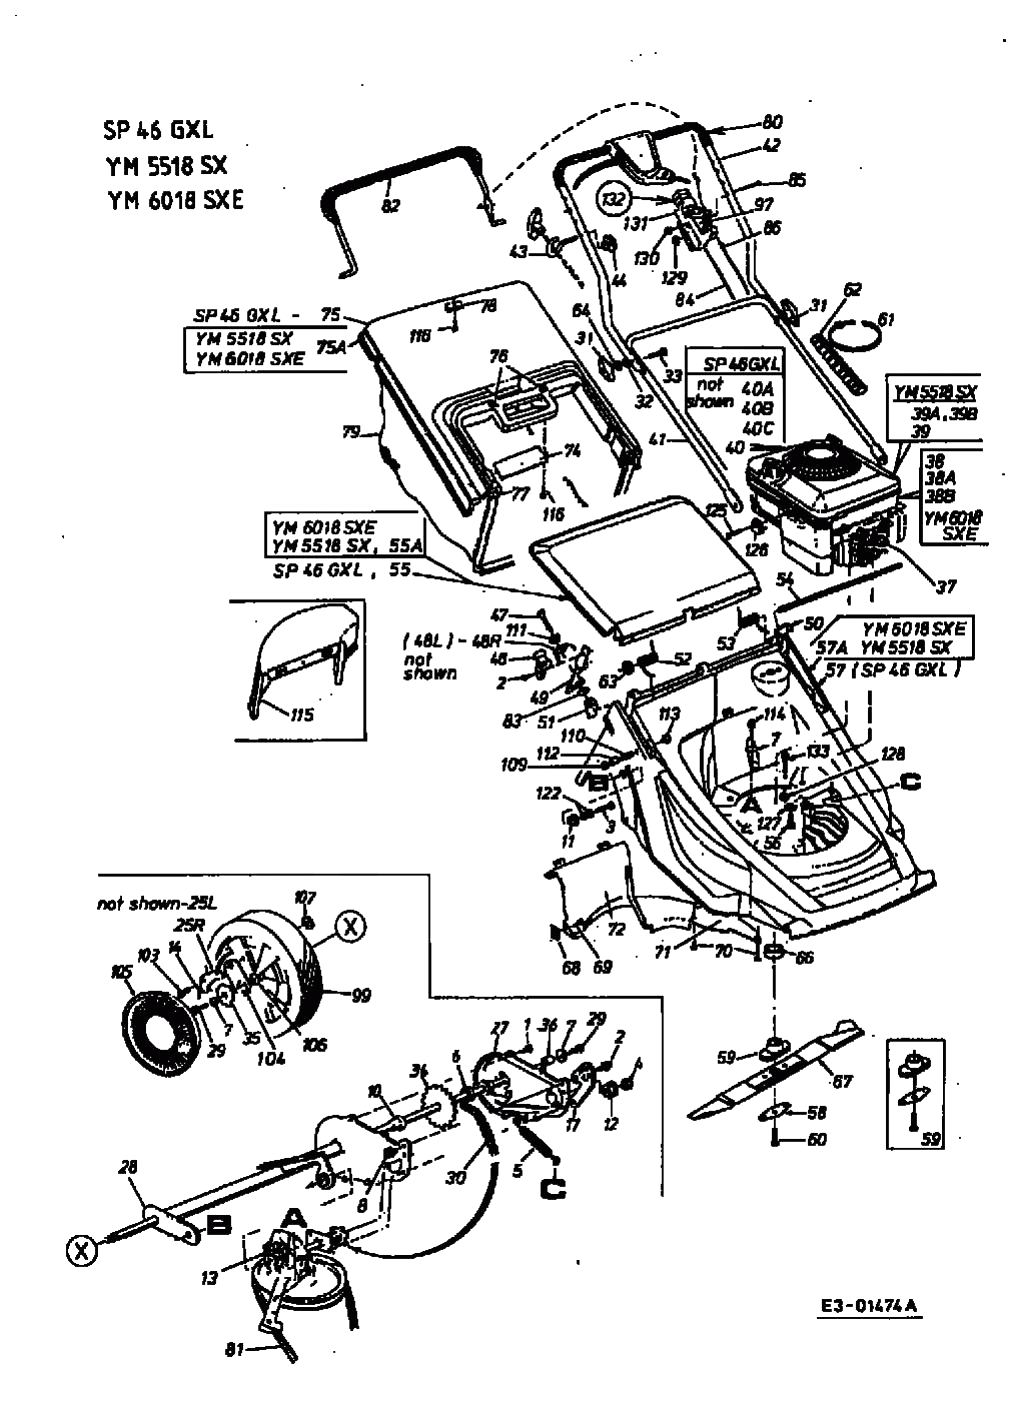 MTD Артикул 12A-X78C678 (год выпуска 2001). Основная деталировка